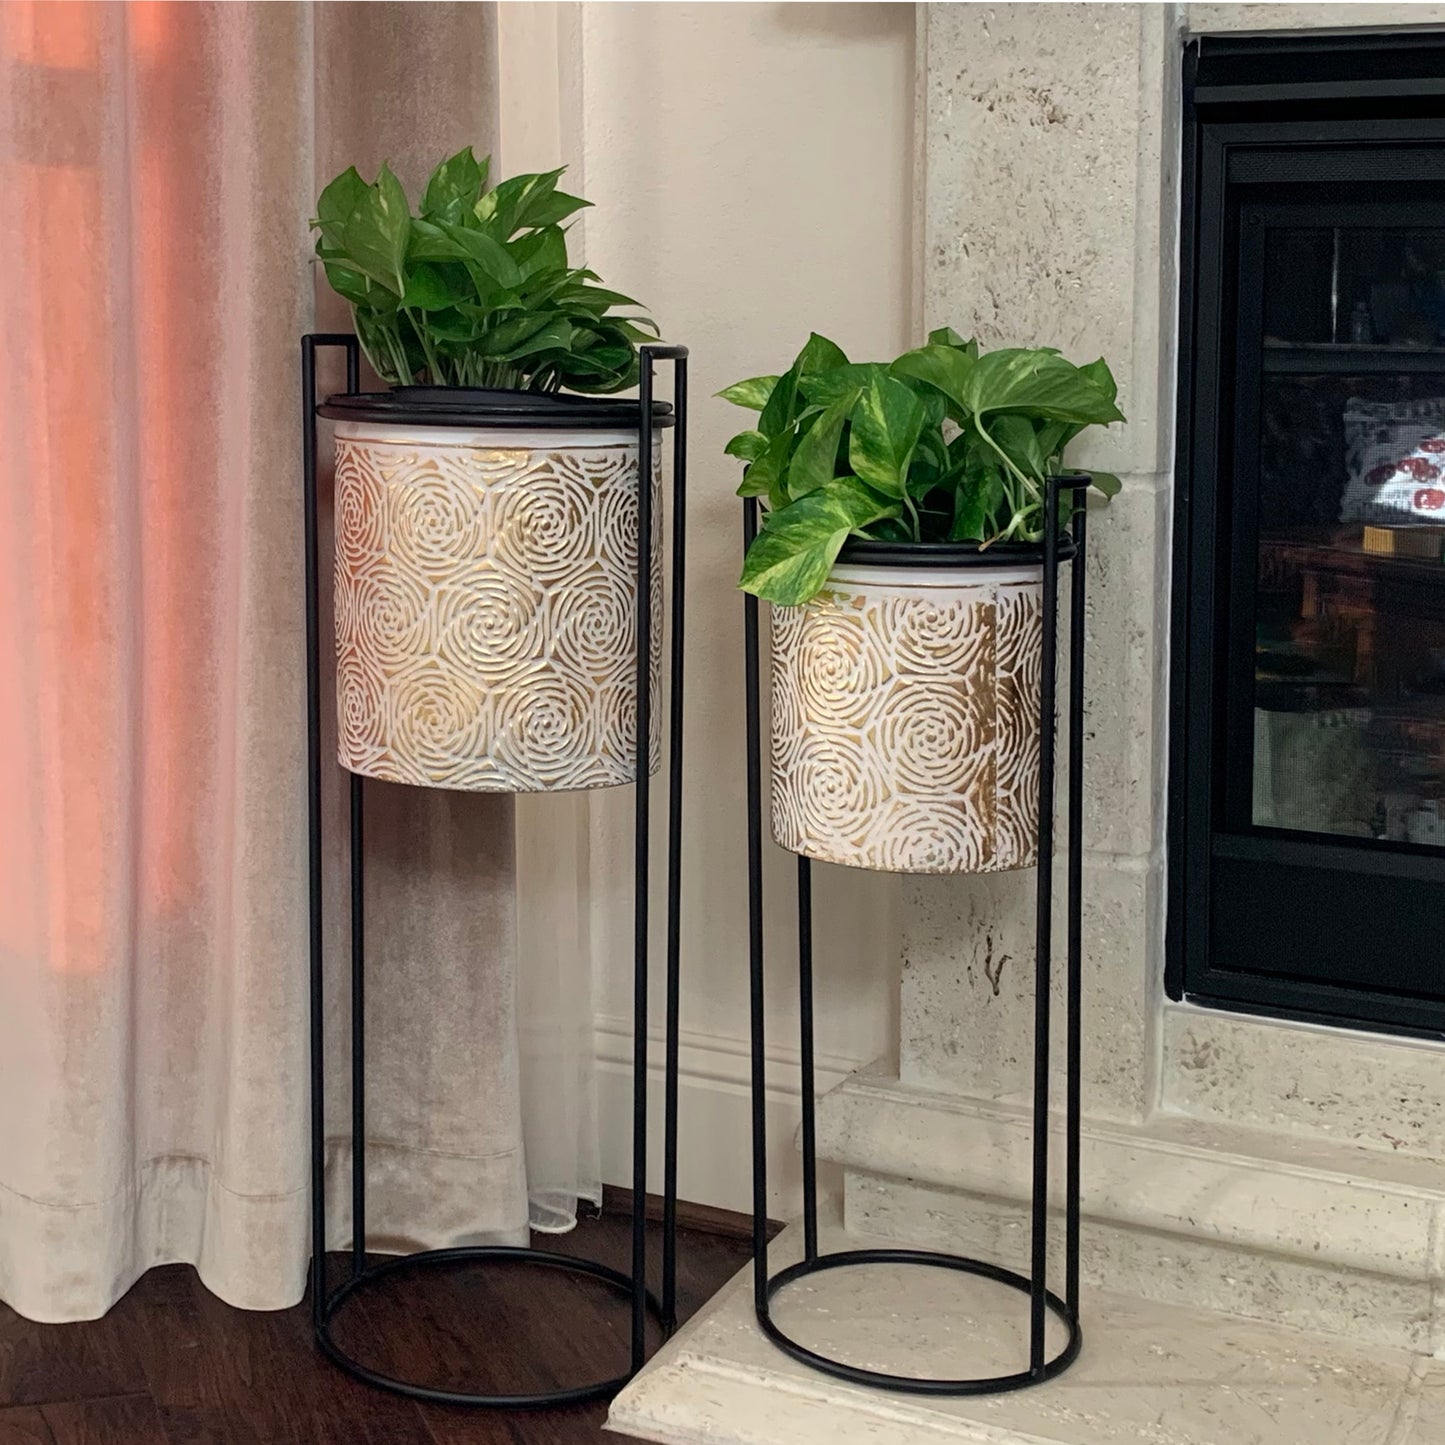 Allgala Planter Pot 2-PC Set Galvanized Planter Pot Gold Rose Design with Iron Stands